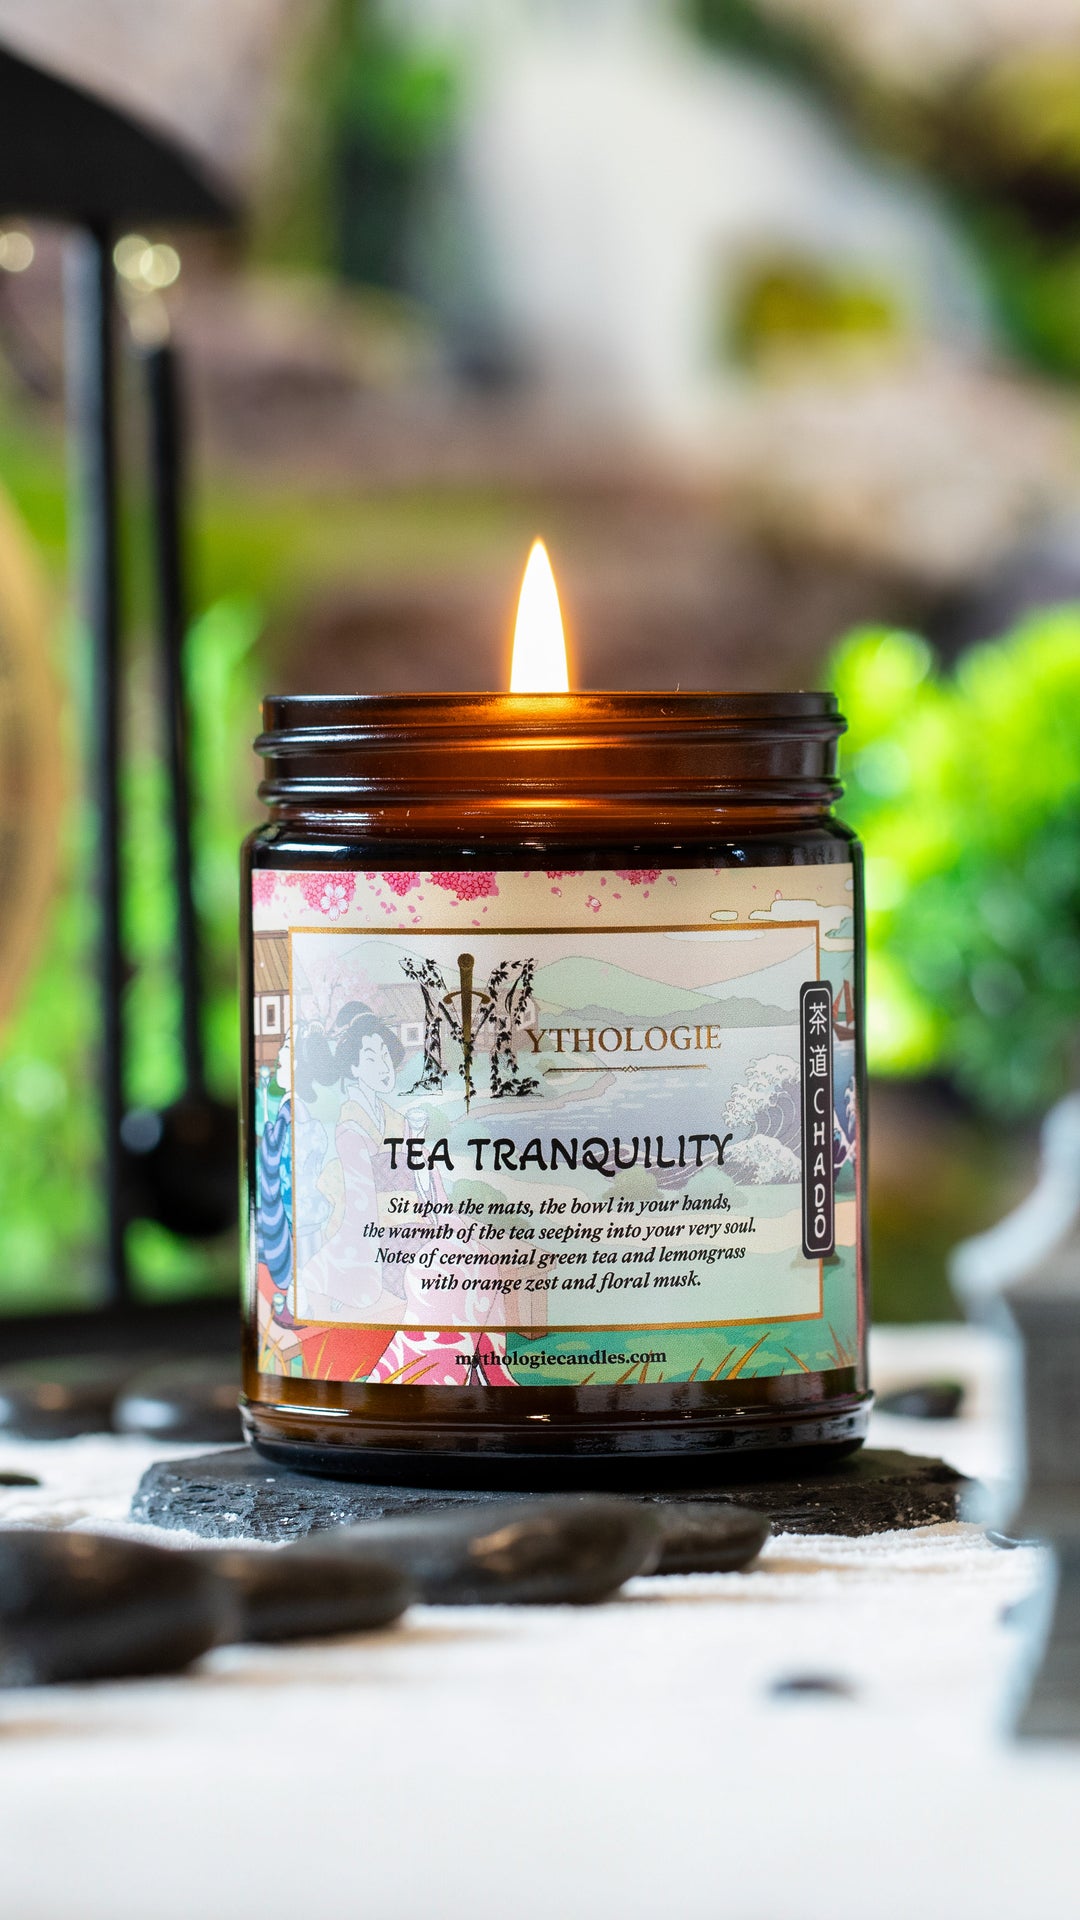 Chadō (茶道) Tea Tranquility